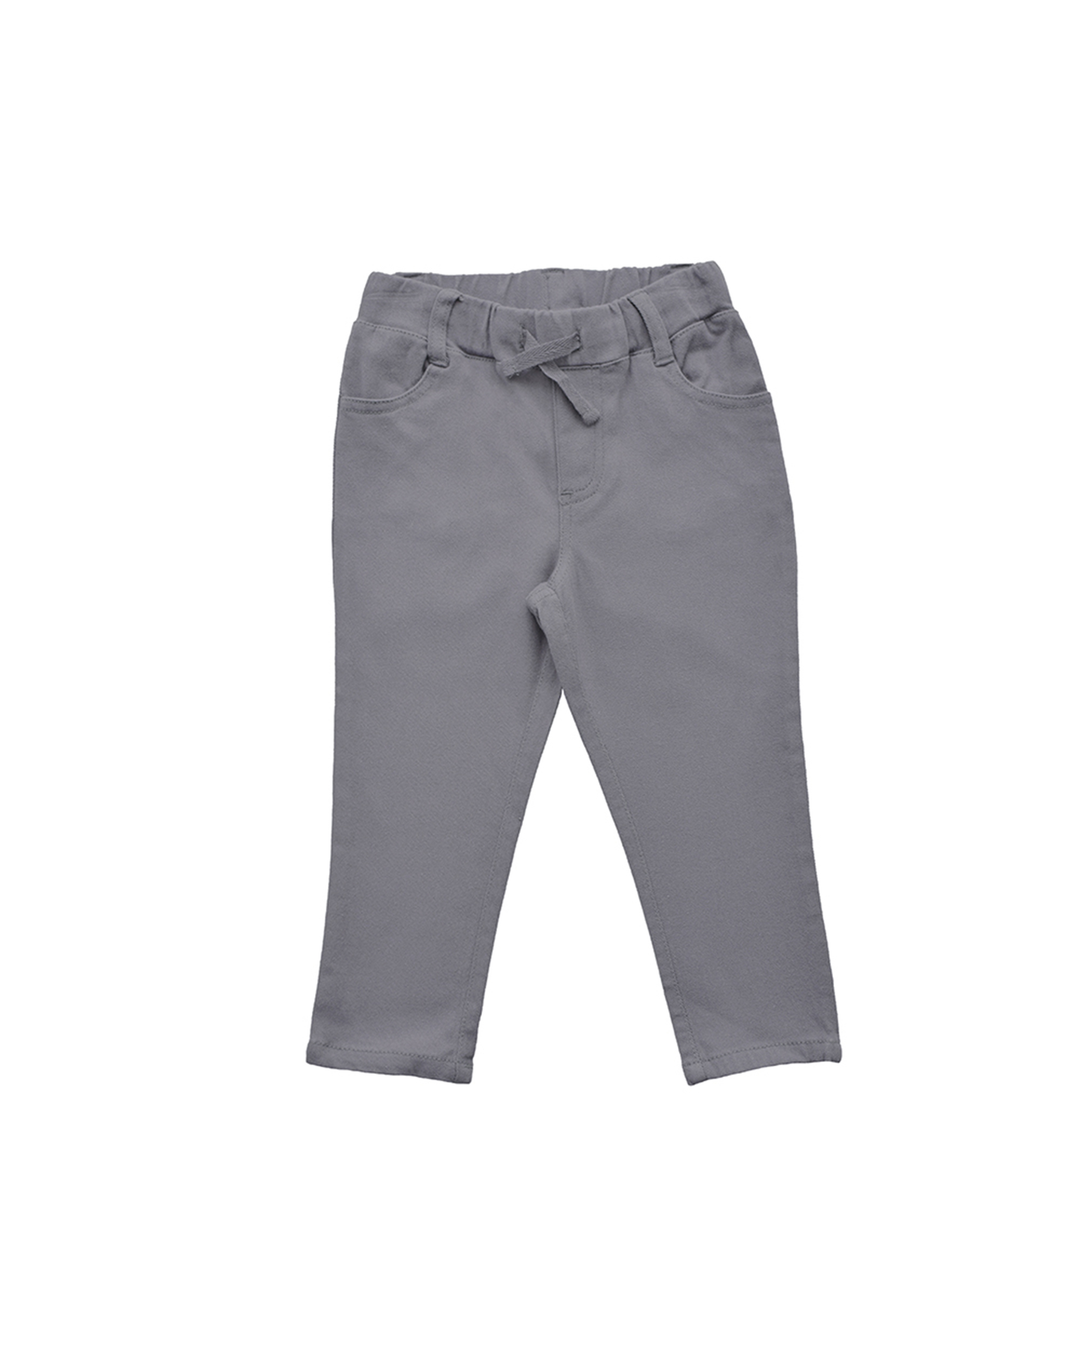 Pantalón gris con elástico en cintura